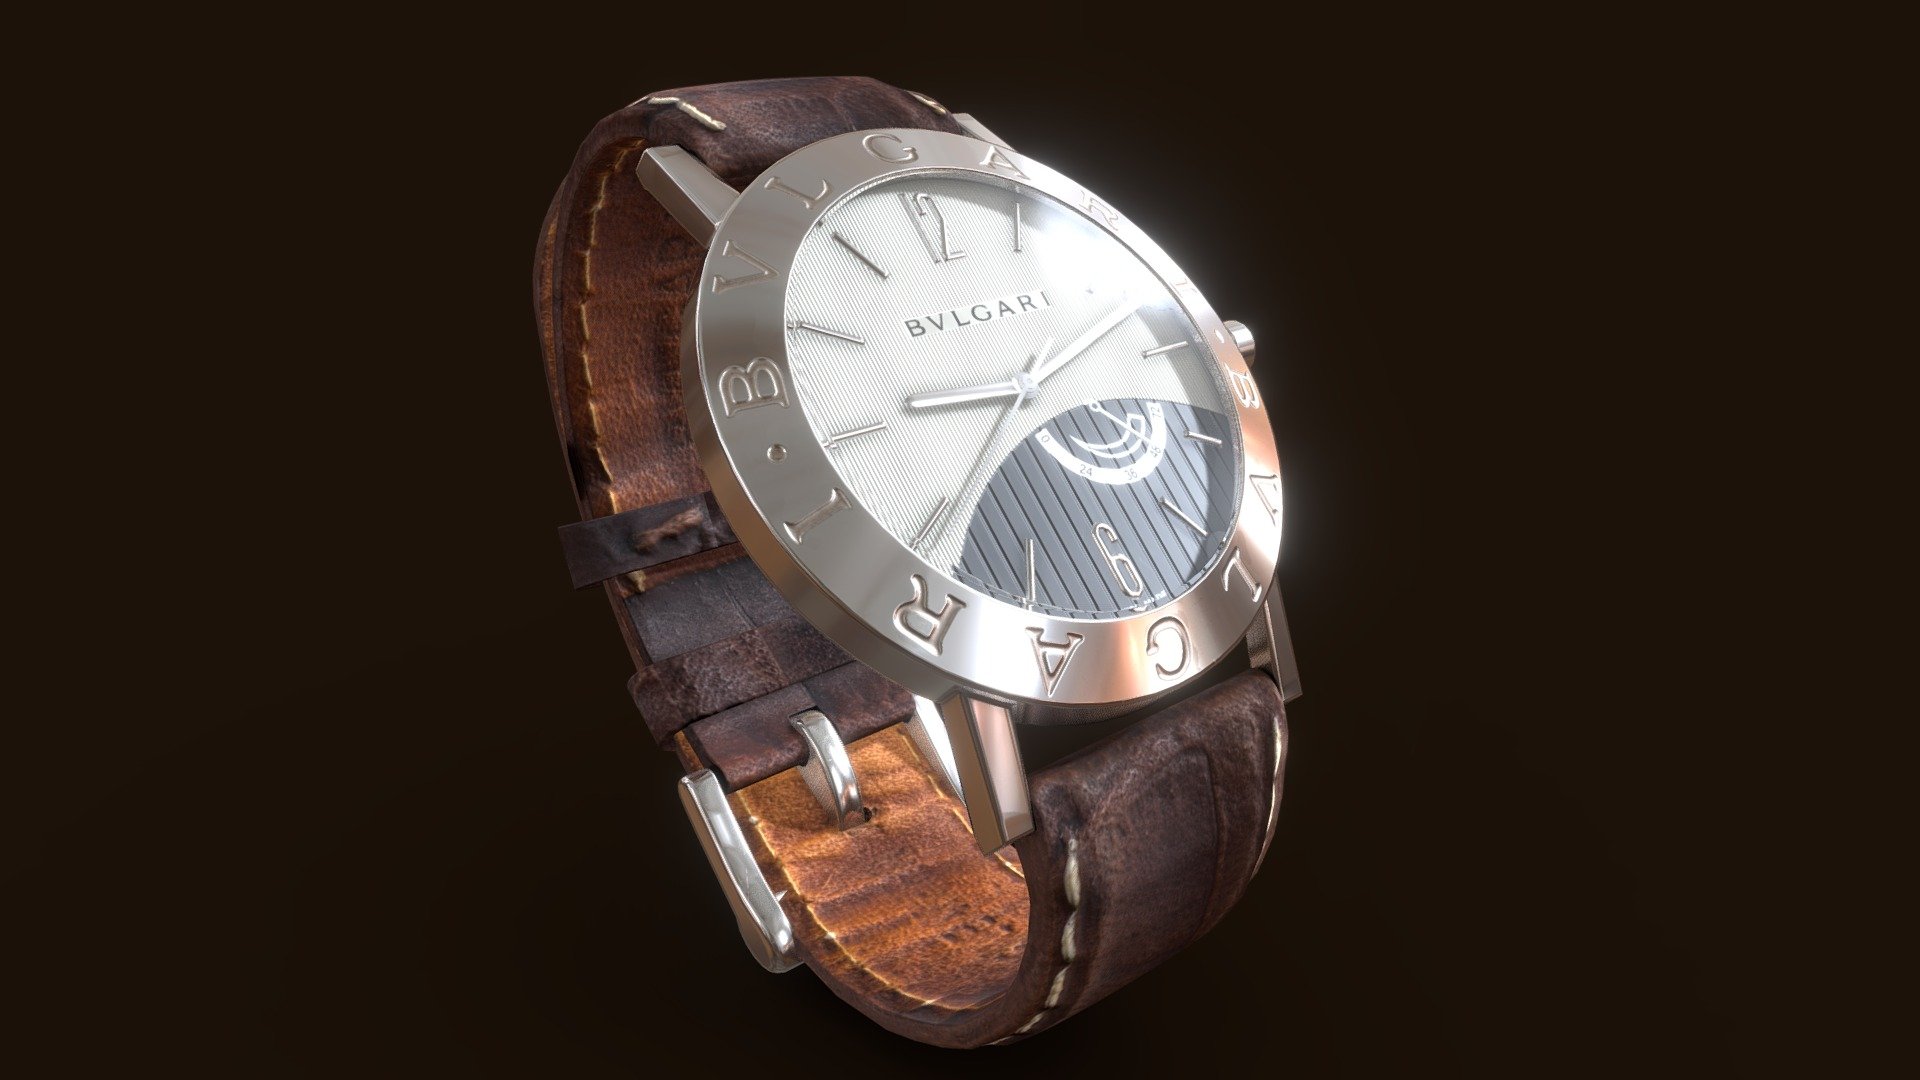 Wrist watch - Bvlgari Armbanduhr (Armbansur) - Wrist watch - Bvlgari Armbanduhr - 3D model by David Young (@David_Young) 3d model